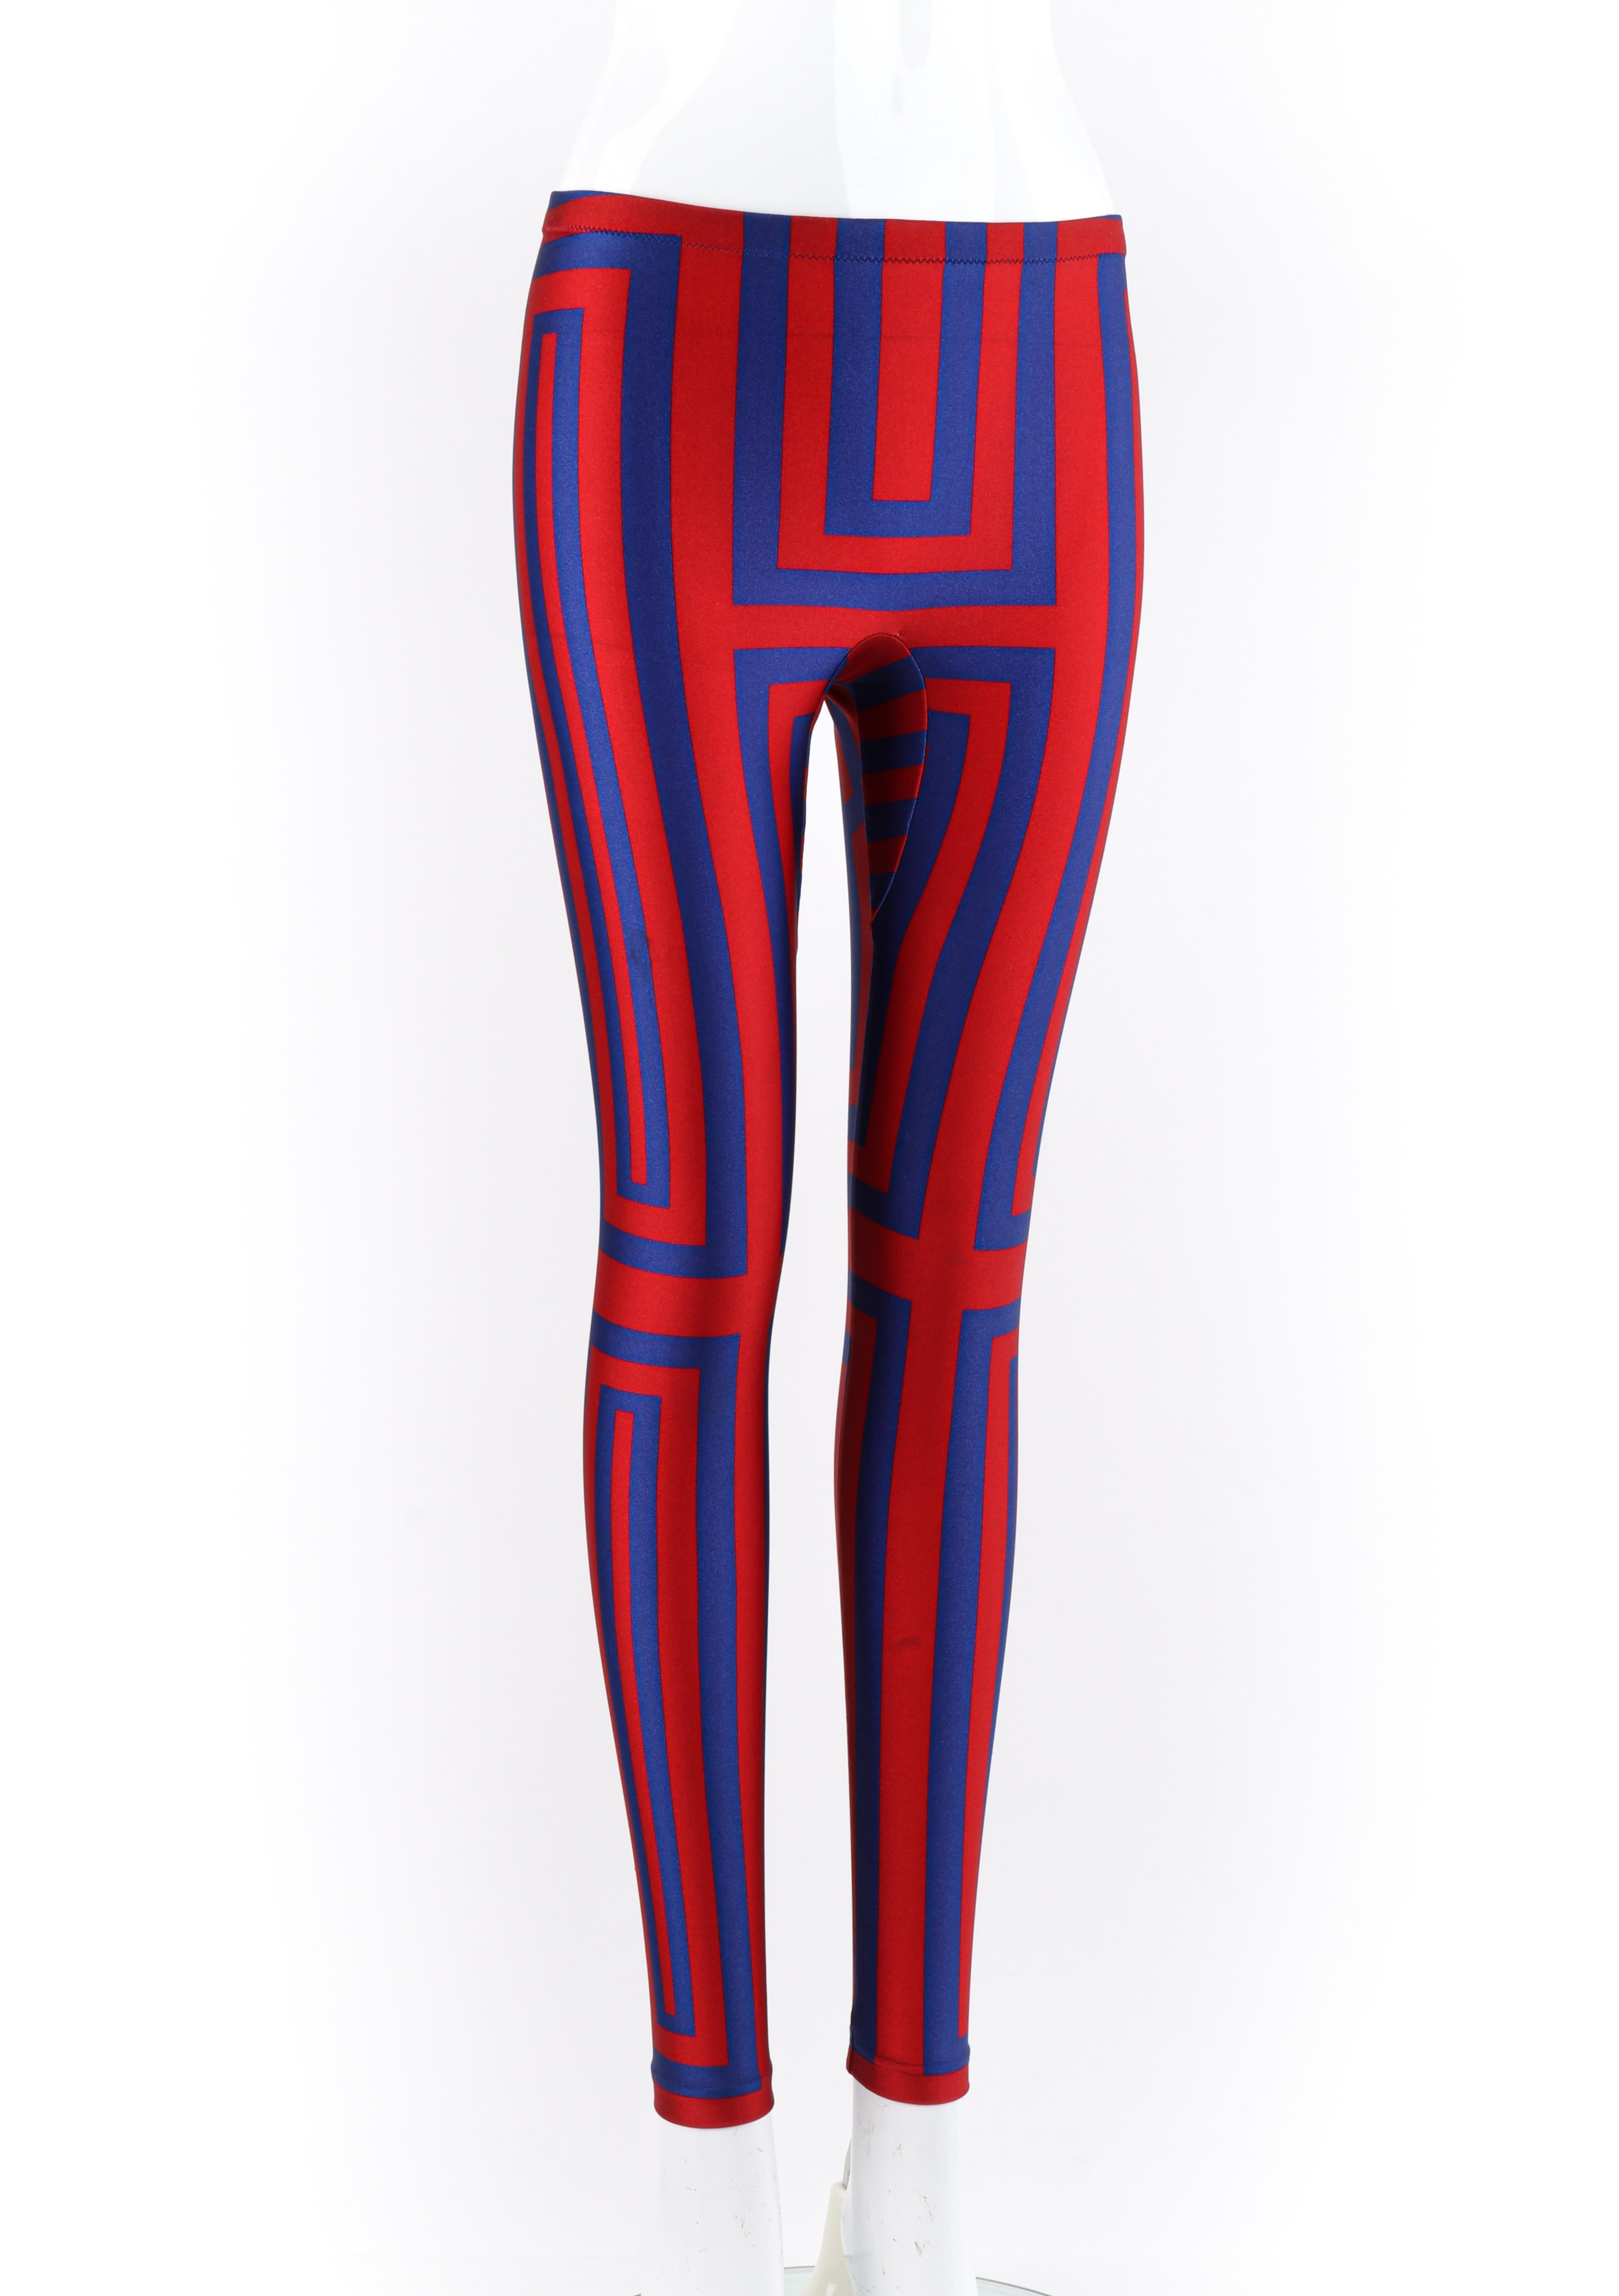 ALEXANDER McQUEEN Resort 2010 Royal Blue & Red Geometric Stripe Legging Pants
 
Brand / Manufacturer: Alexander McQueen
Collection: Resort 2010- Runway look #1
Designer: Alexander McQueen 
Style: Leggings 
Color(s): Royal blue, red
Lined: No
Marked